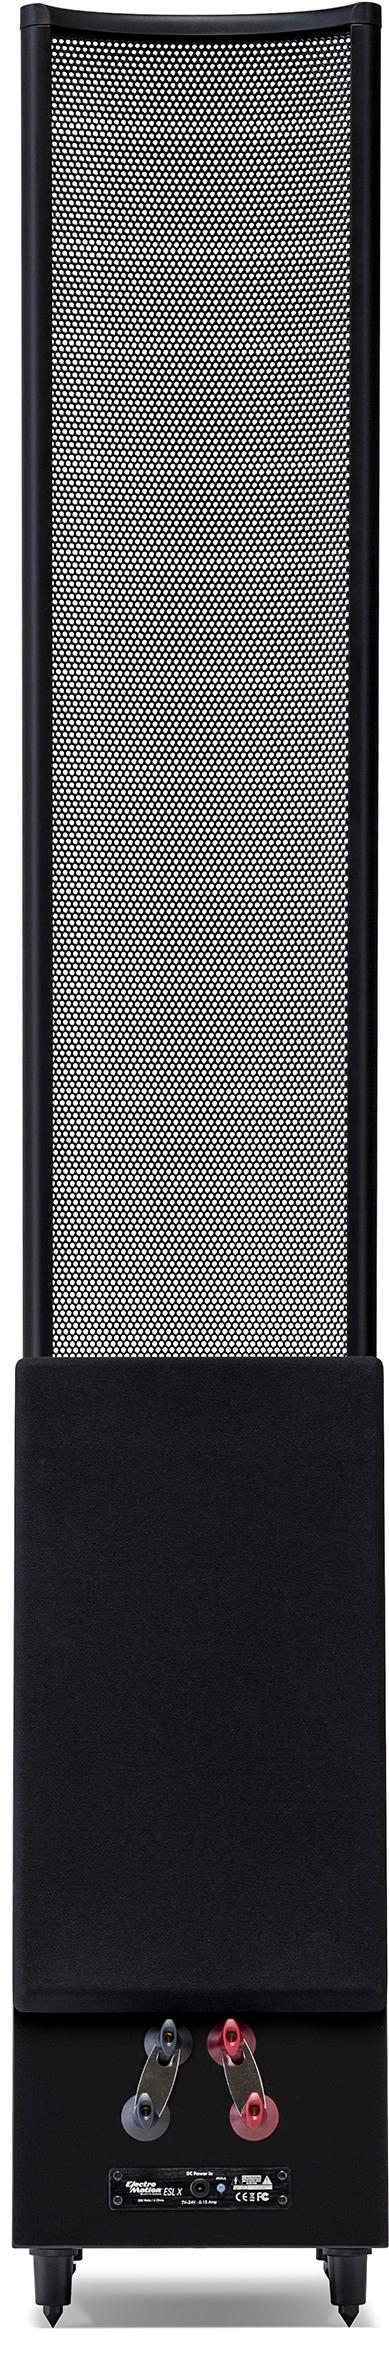 Back View: MartinLogan - ElectroMotion Dual 8" Passive 2-Way Floor Speaker (Each) - Satin black